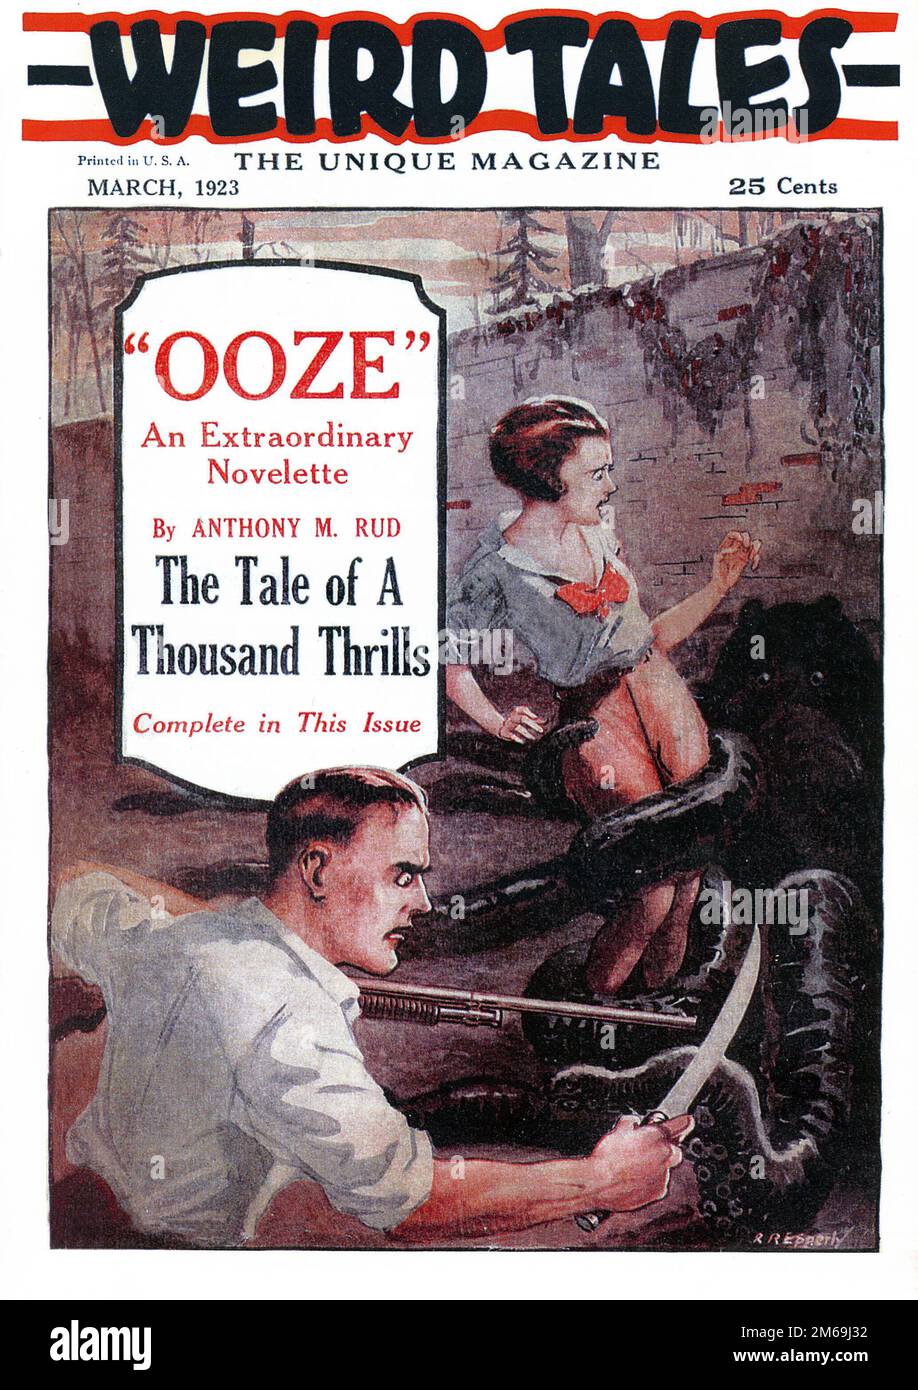 Vintage Magazine couverture - Weird Tales Mars 1923 Banque D'Images